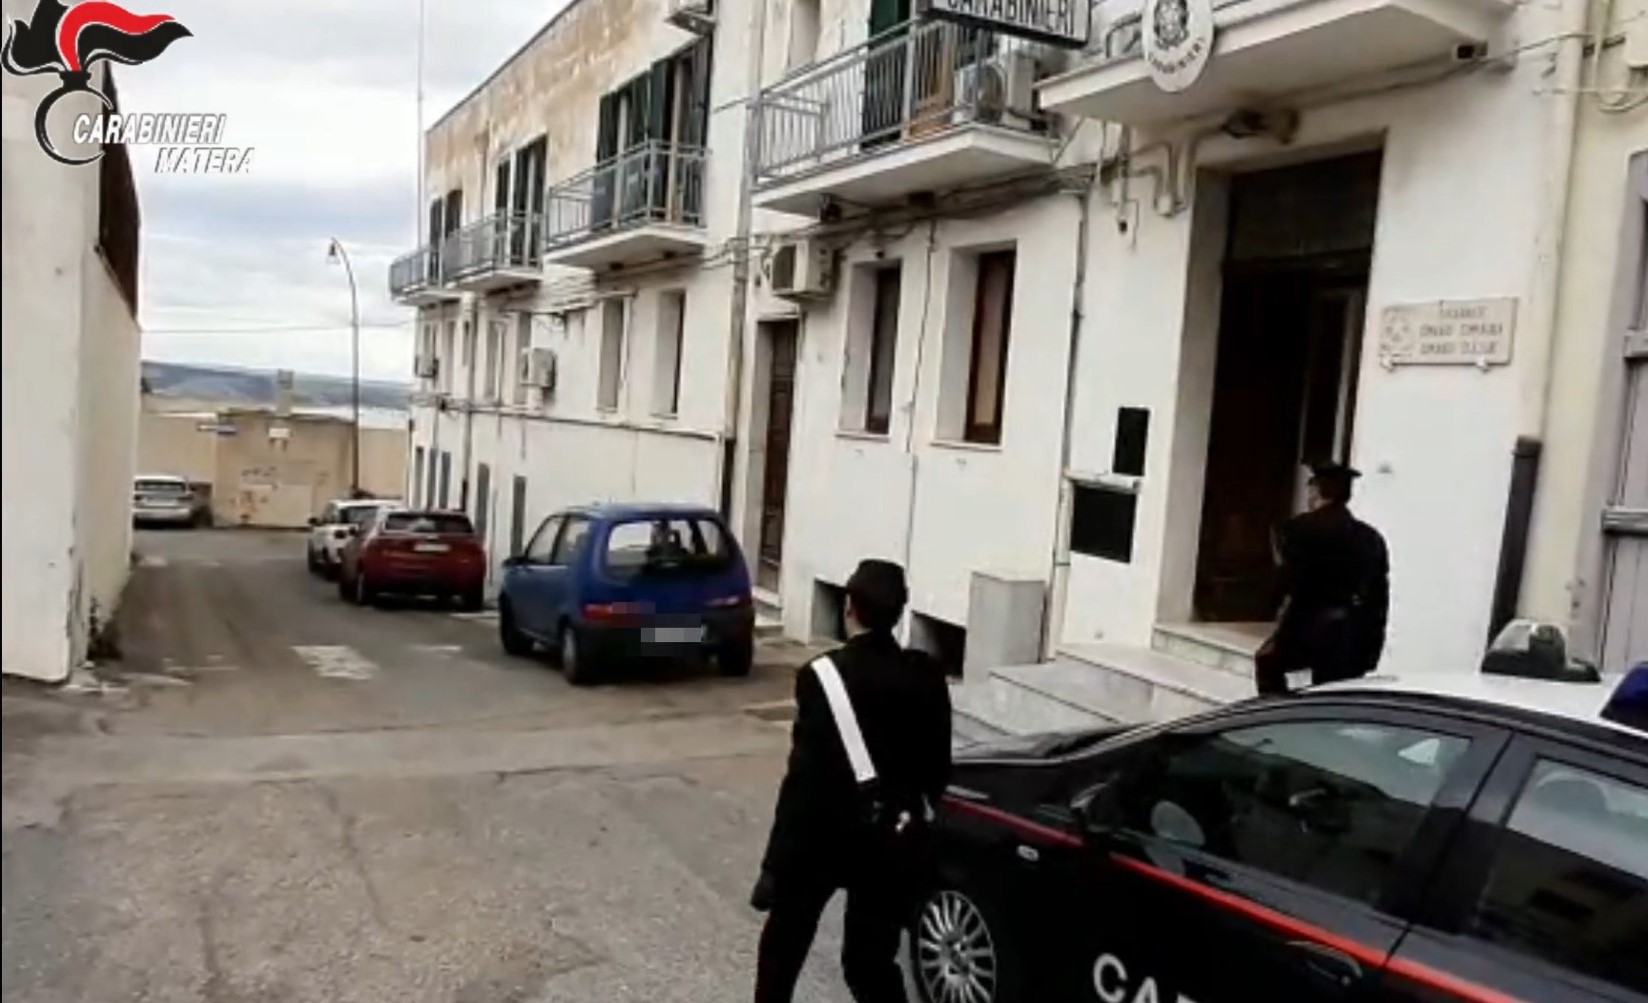 Operazione Idra: sequestrate dai Carabinieri armi, munizioni e droga. In manette 36enne di Tursi. Denunciata una ragazza per possesso di marijuana